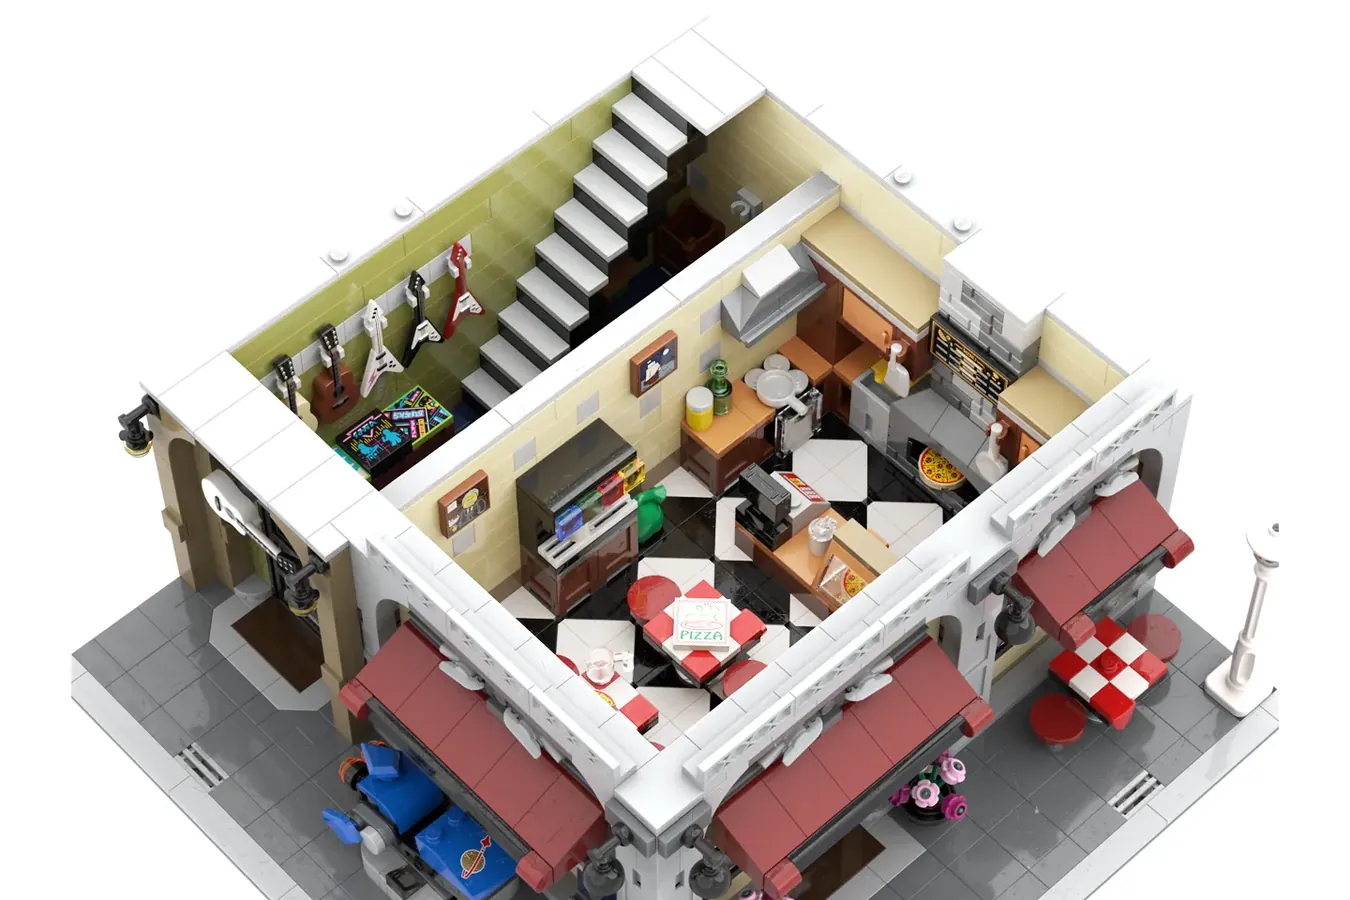 Lego (R) ideas for modular games Center Building